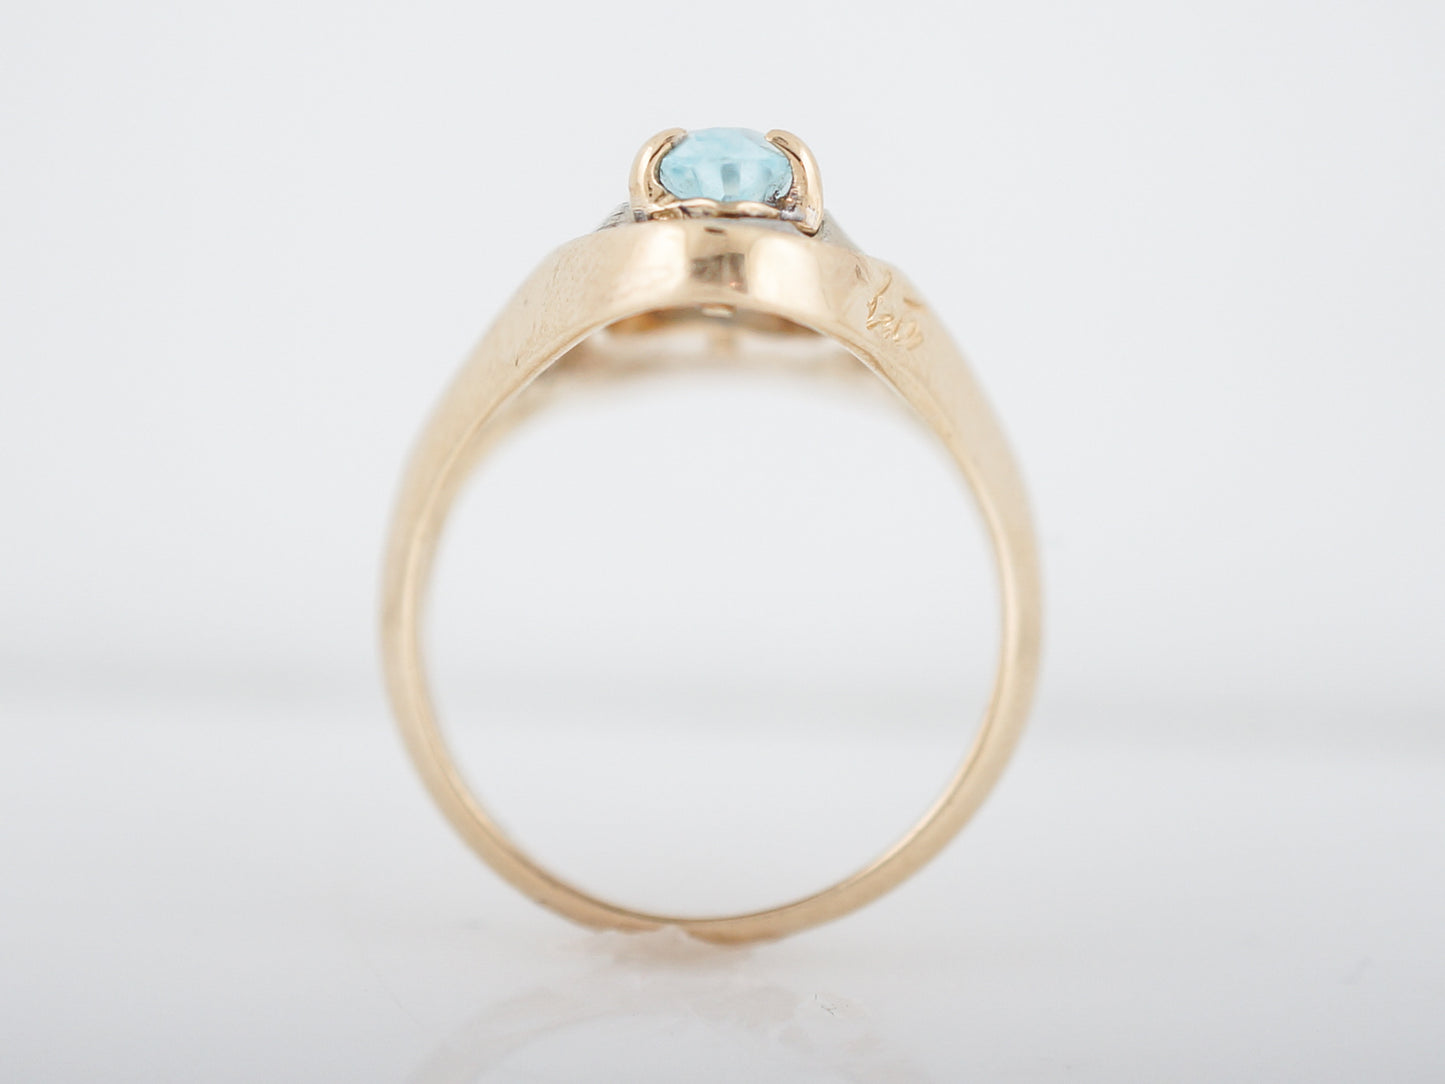 Modern Erte Right Hand Ring 1.80 Oval Cut Blue Topaz in 14k Yellow Gold